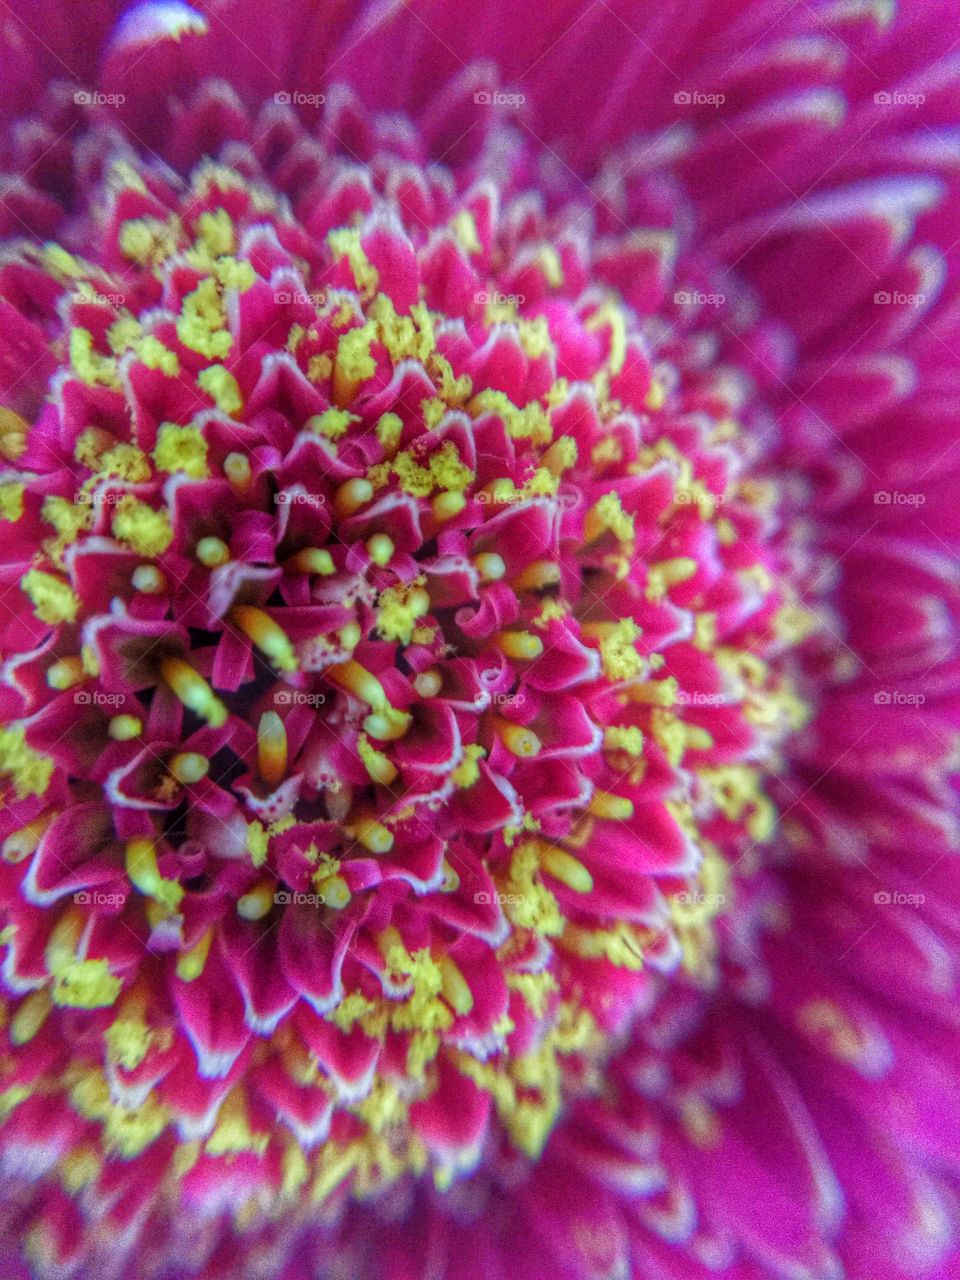 Close up flower